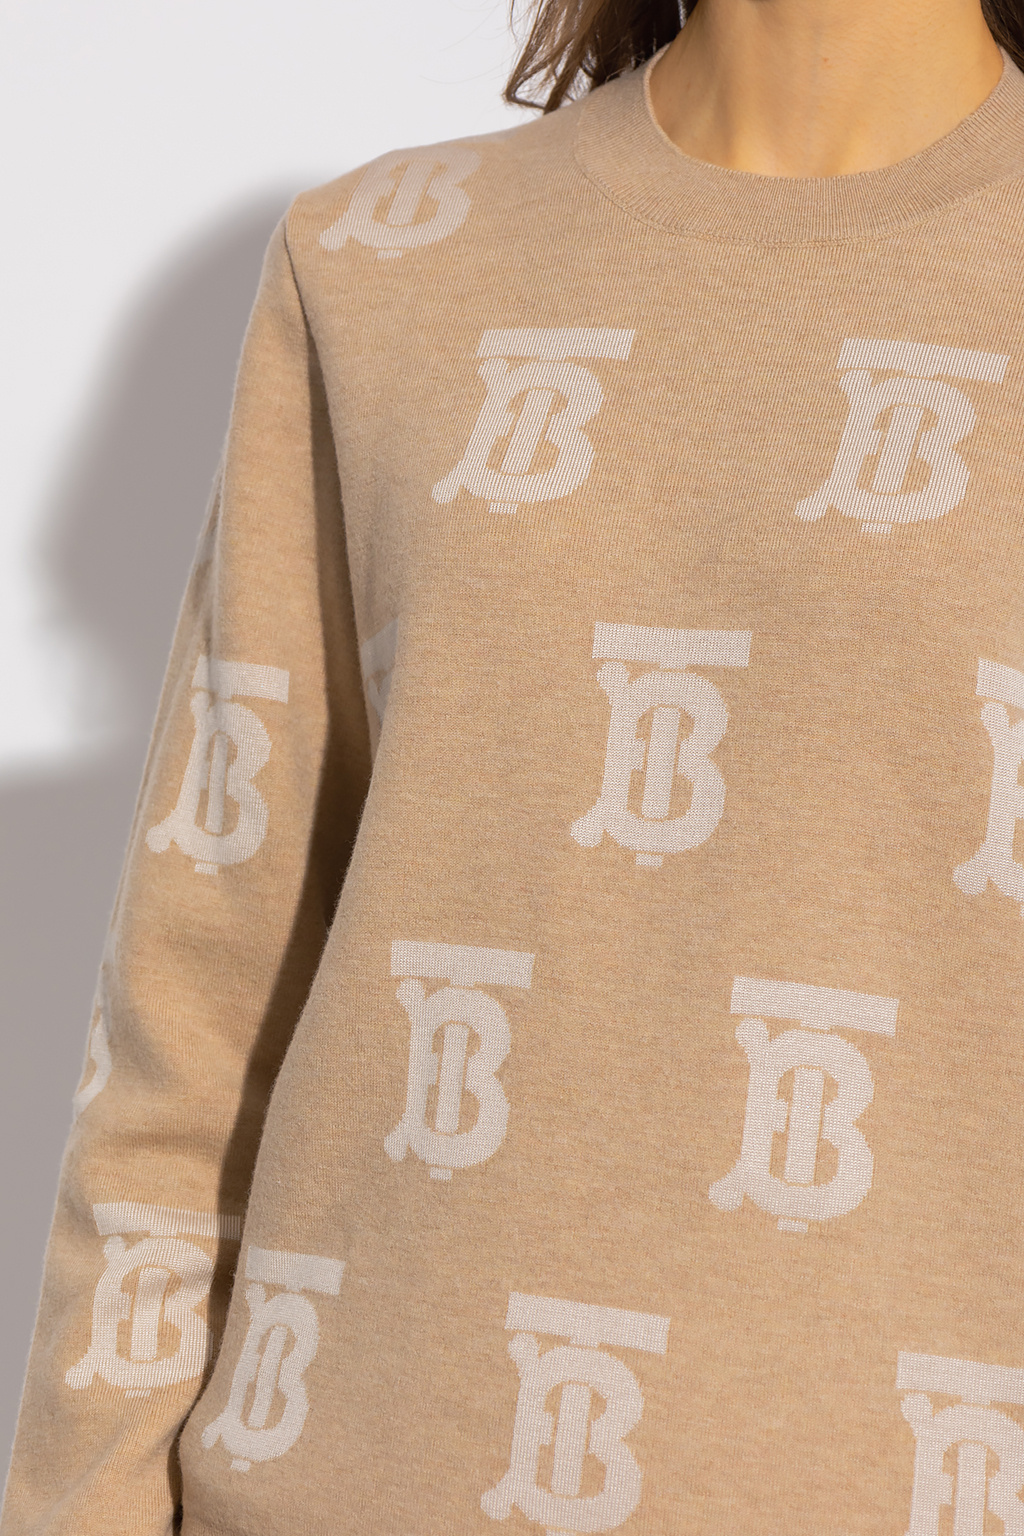 Burberry Sweater with logo | Women's Clothing | Vitkac